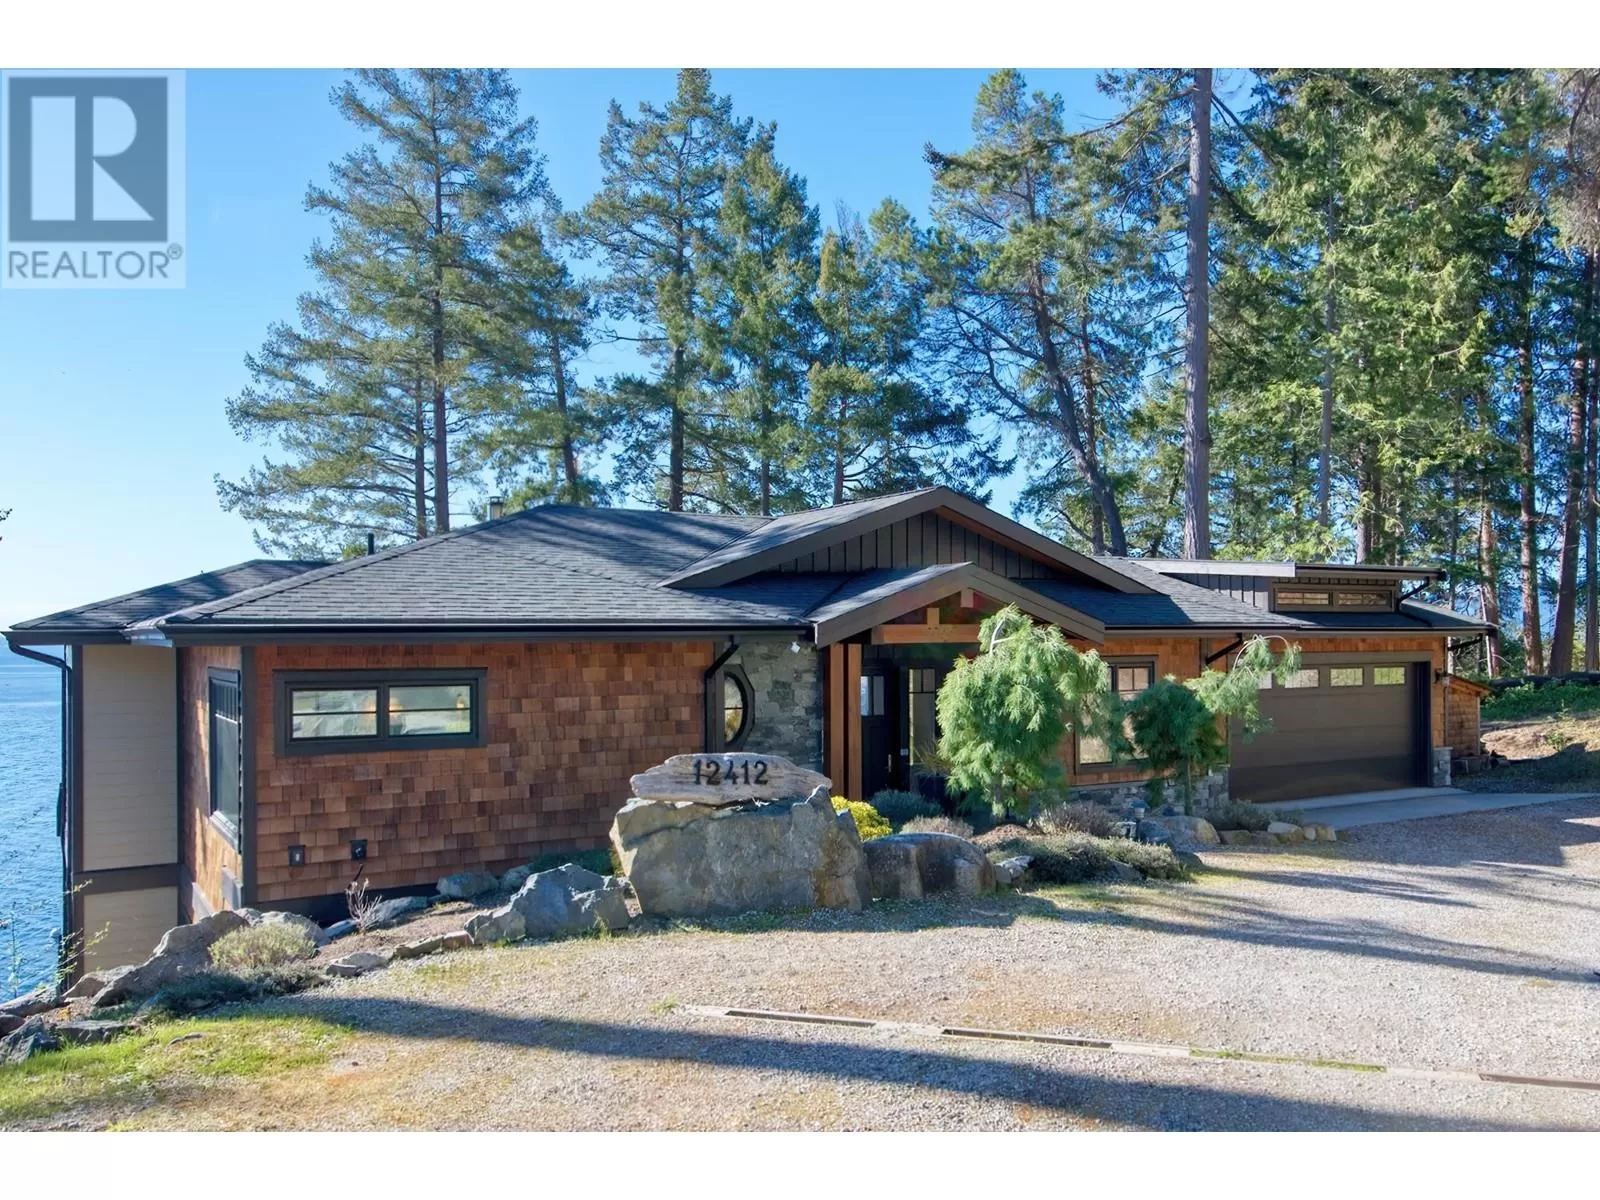 House for rent: 12412 Arbutus Landing Road, Pender Harbour, British Columbia V0N 2H1